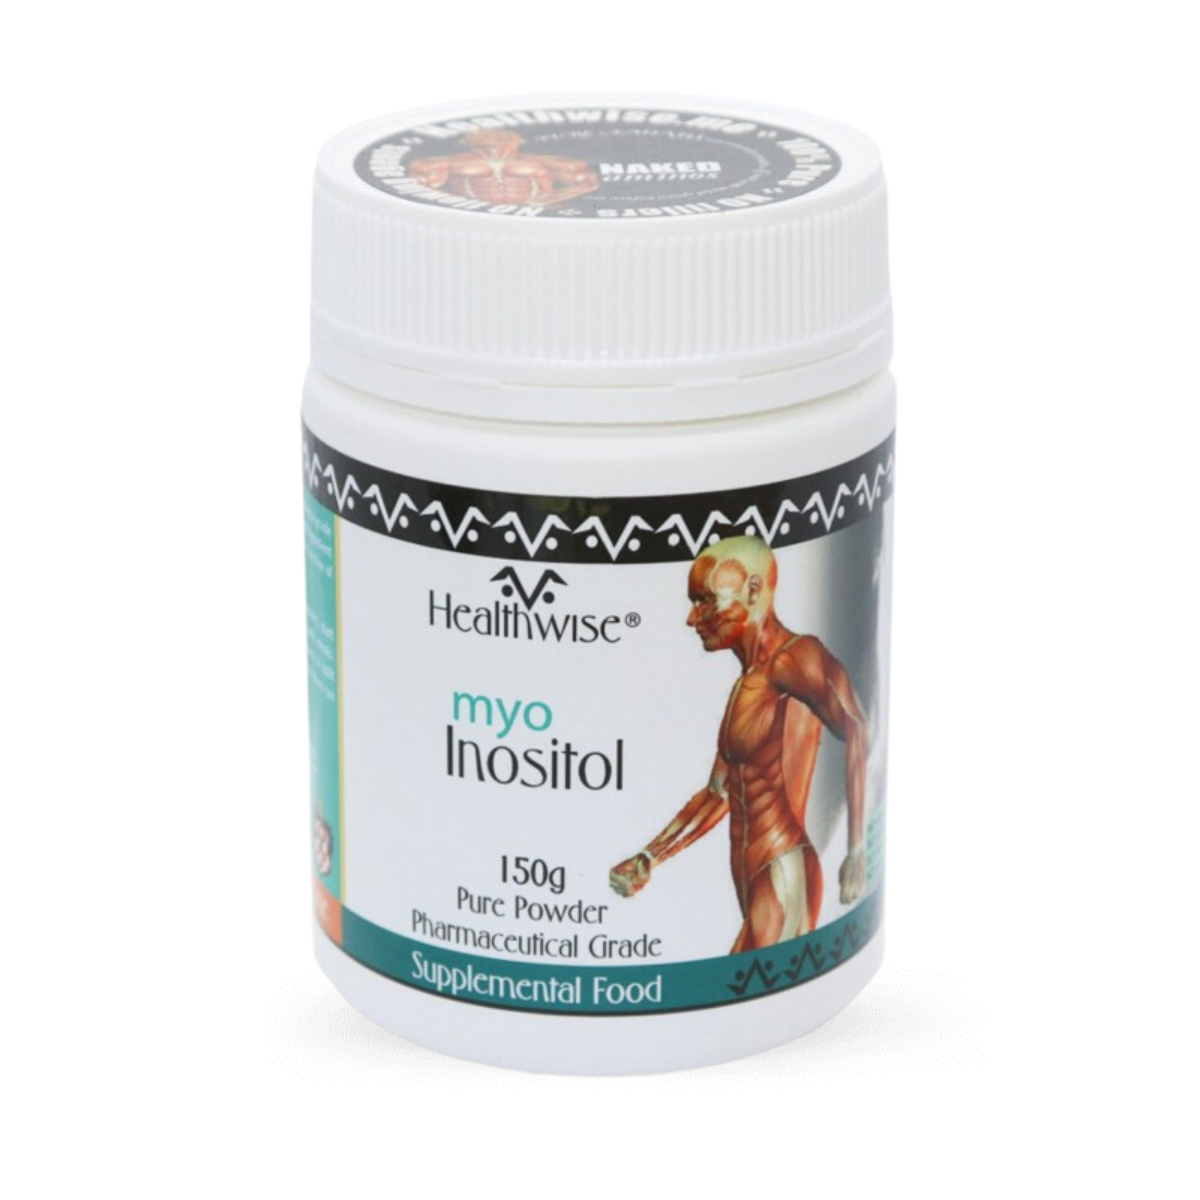 HealthWise Inositol Powder 150g